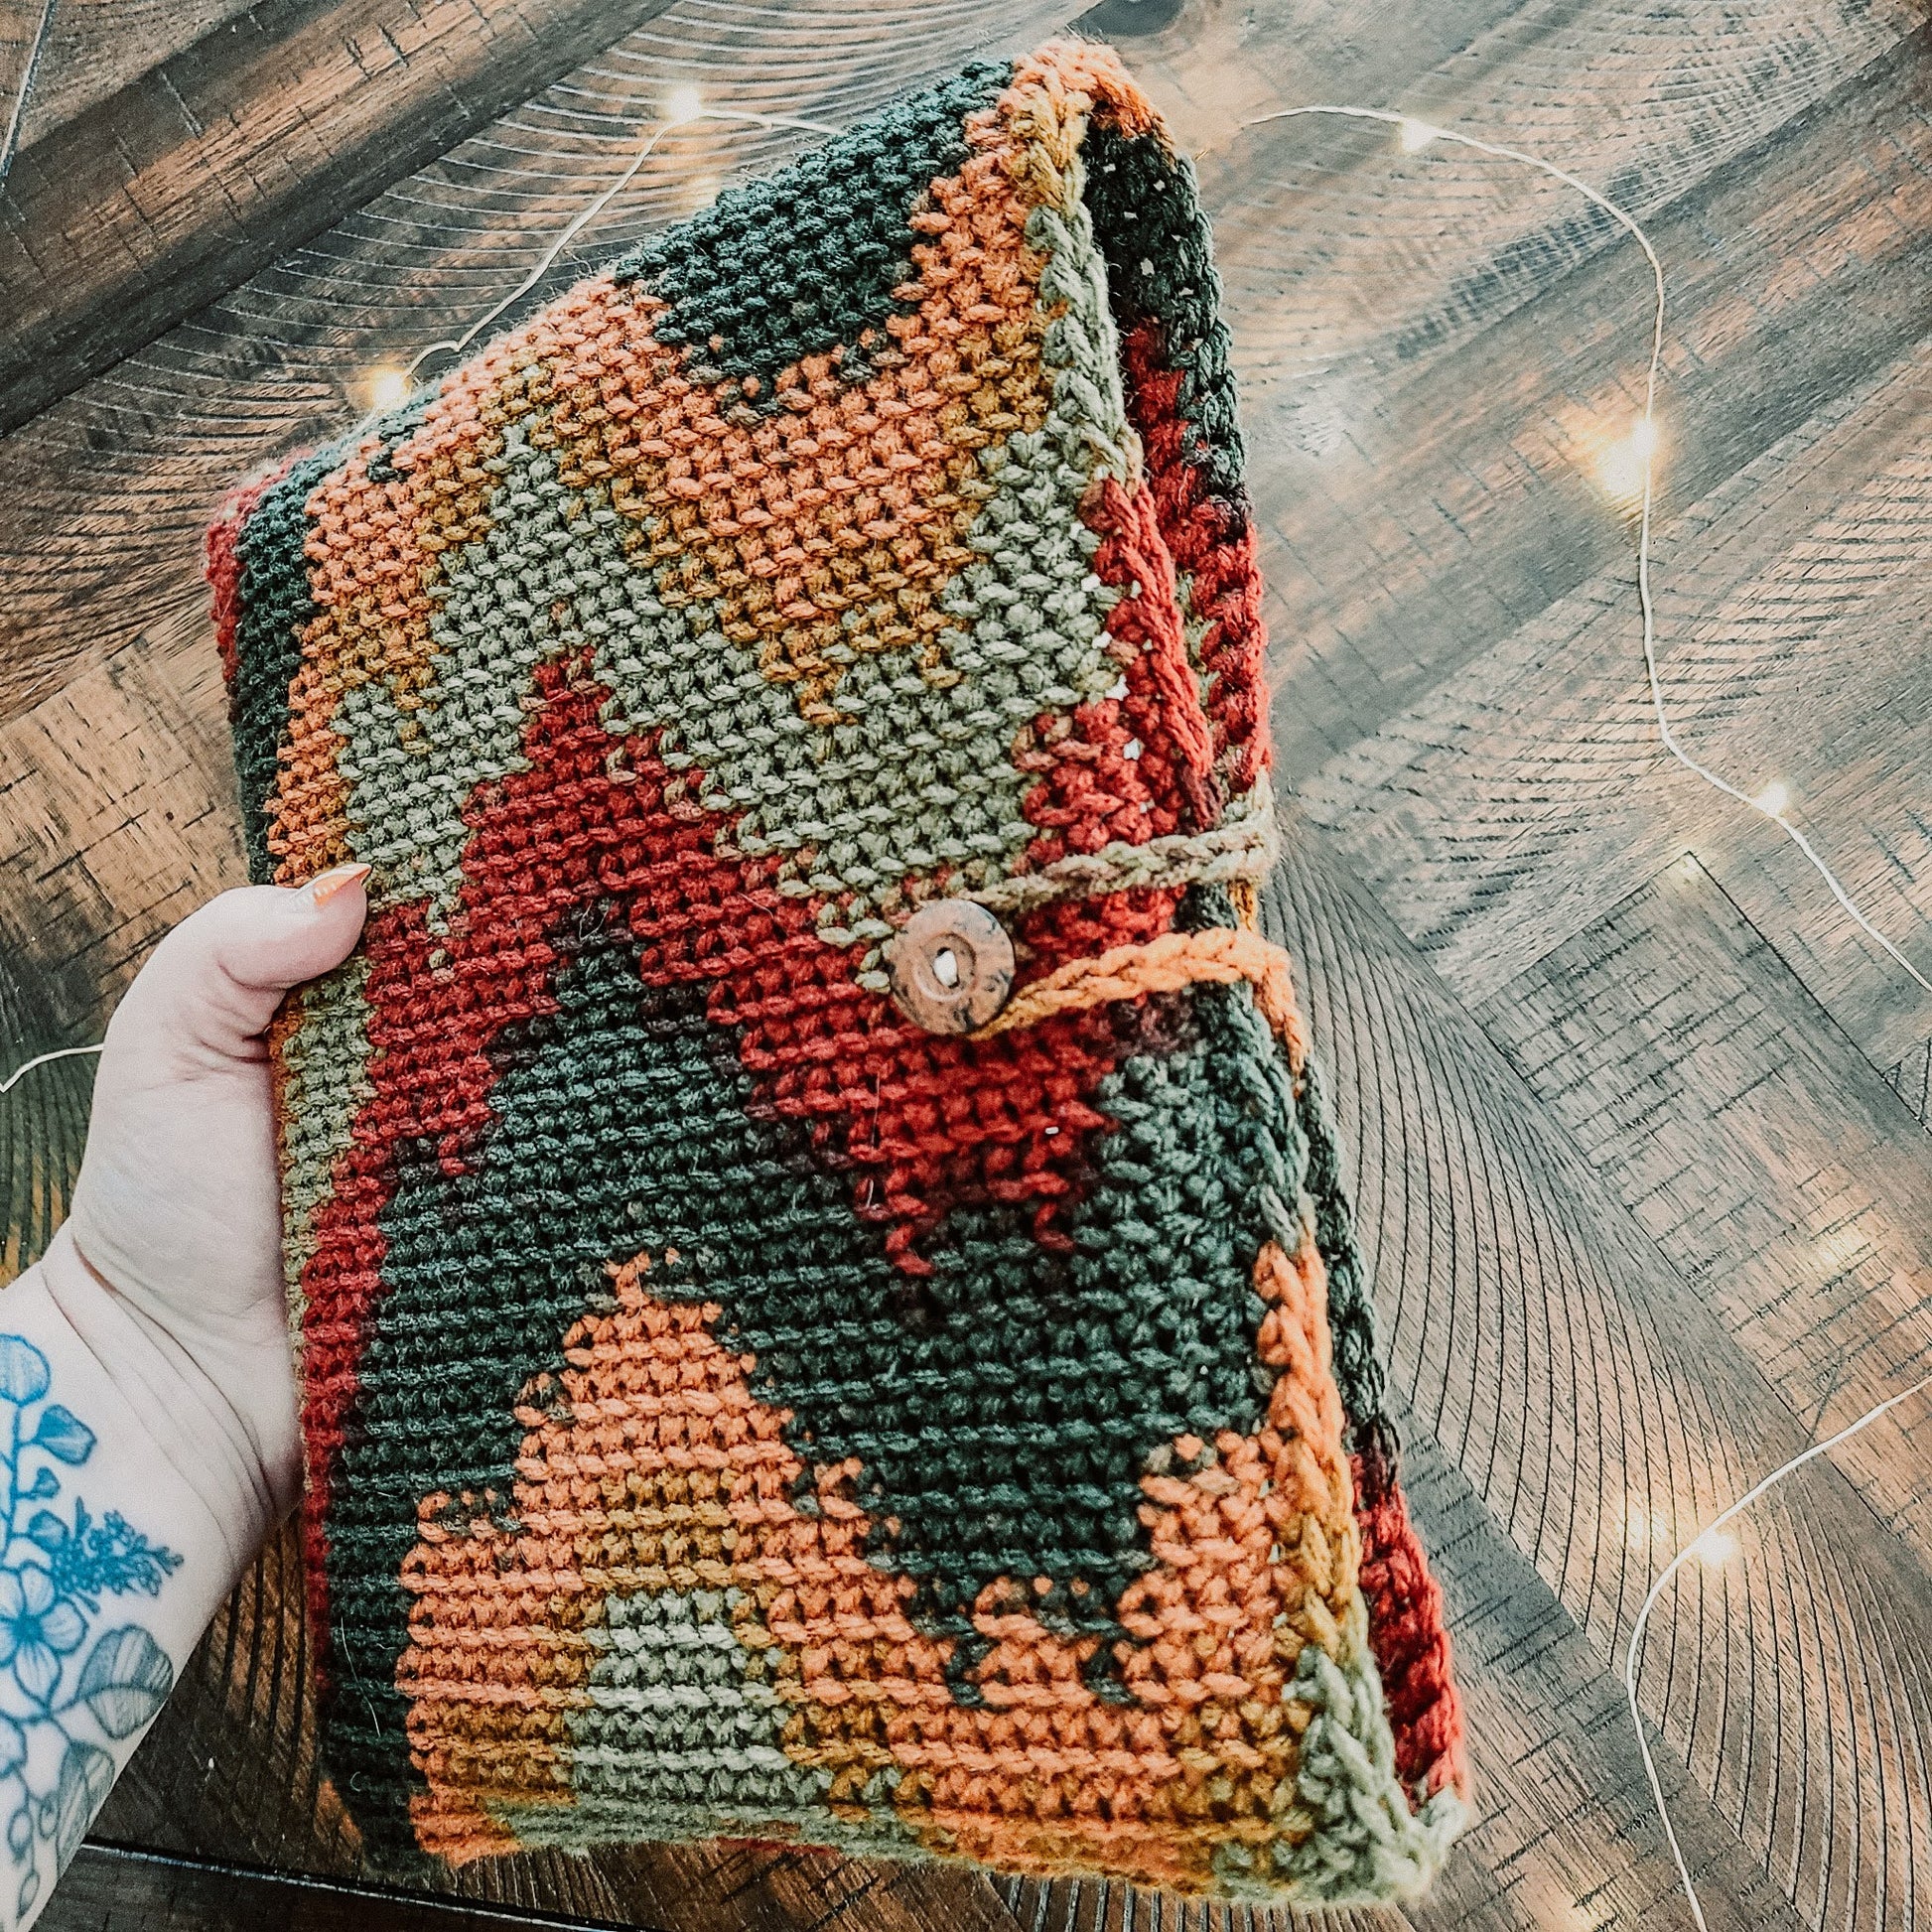 crochet book sleeve + bag pattern